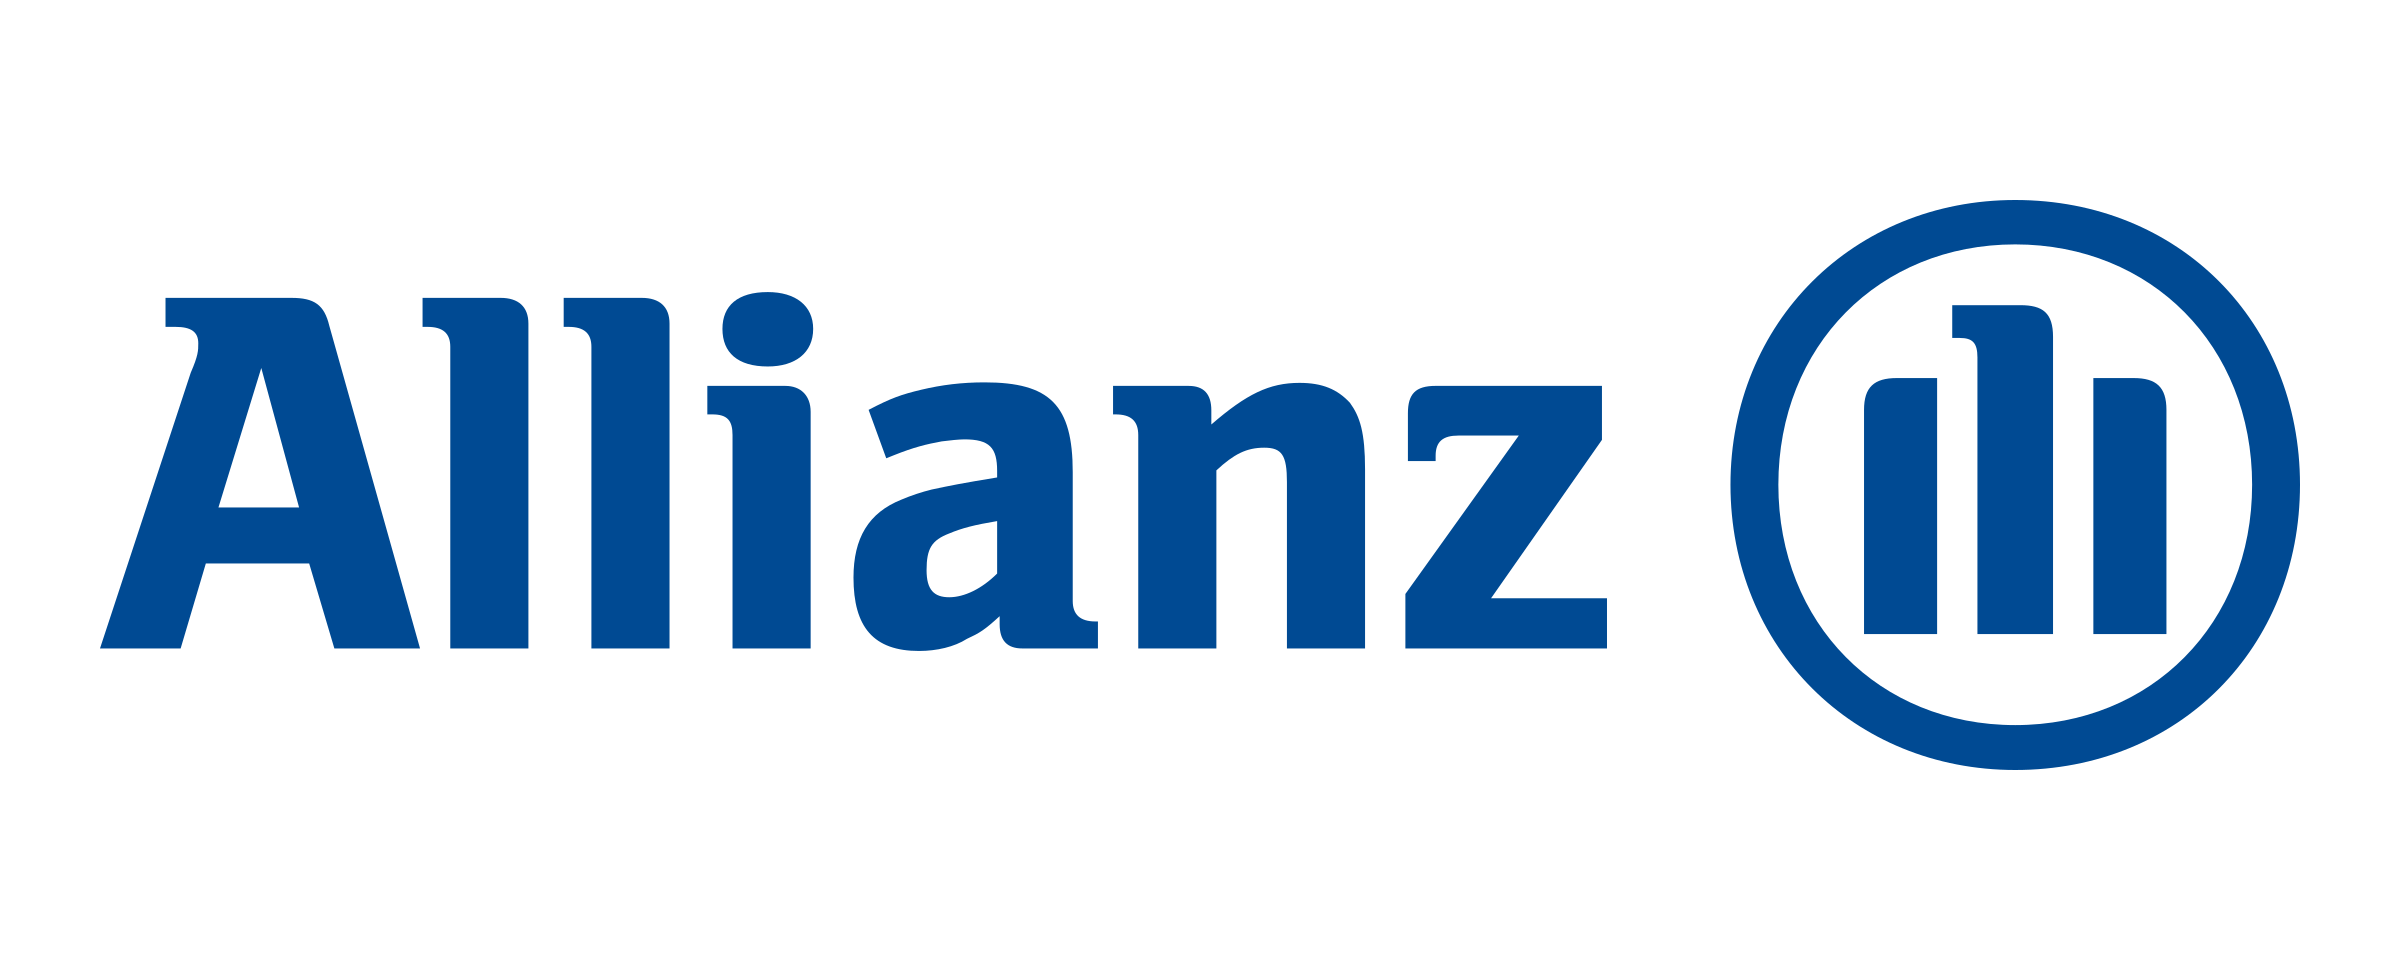 Allianz Logo PNG Transparent & SVG Vector - Freebie Supply